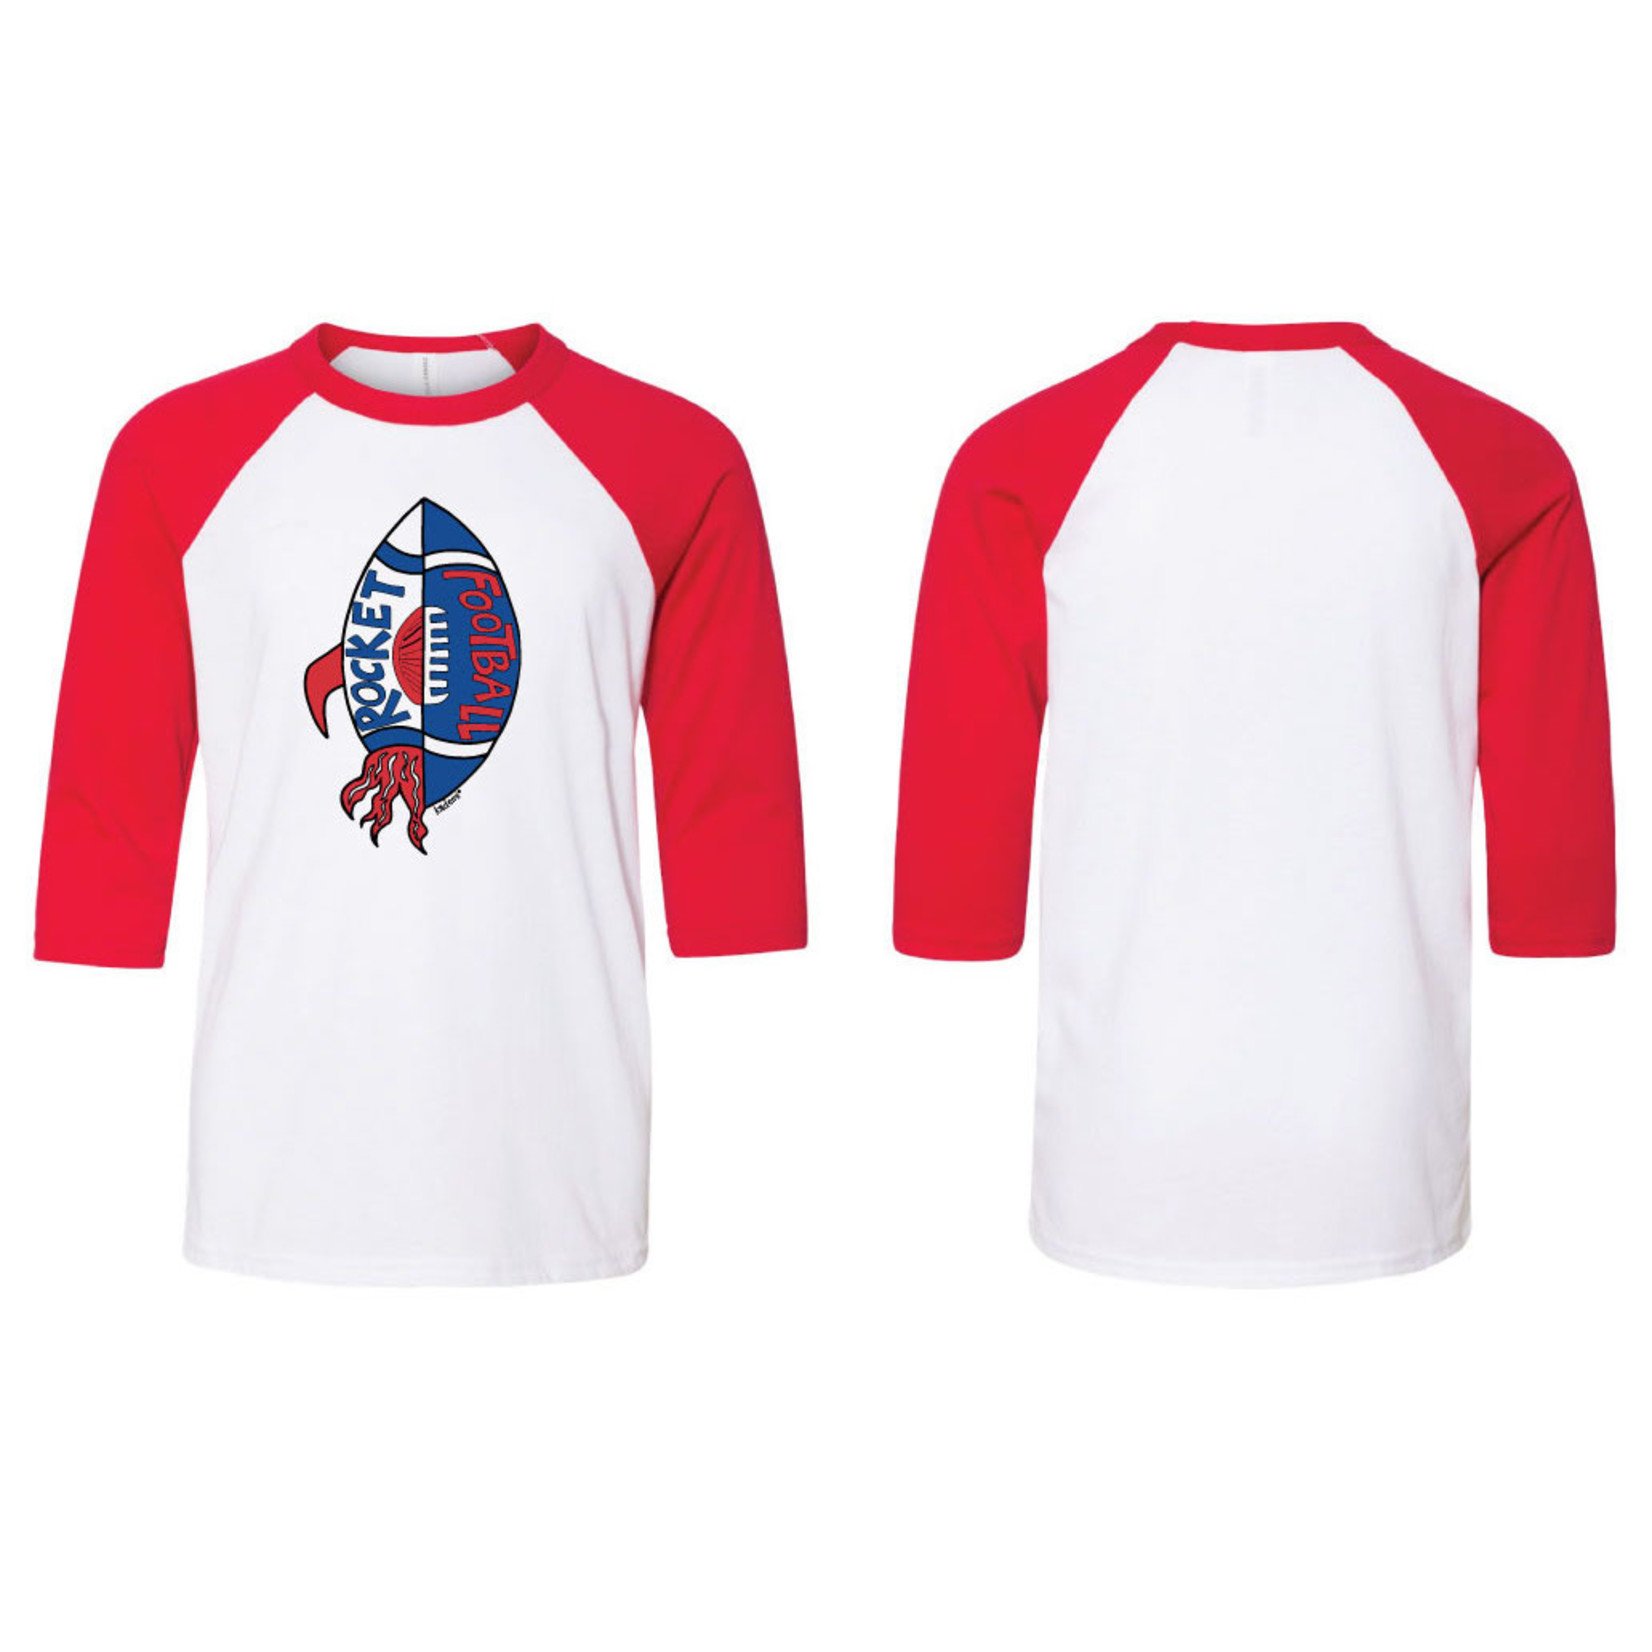 Kademi Rocket Football Baseball Sleeve Shirt Youth